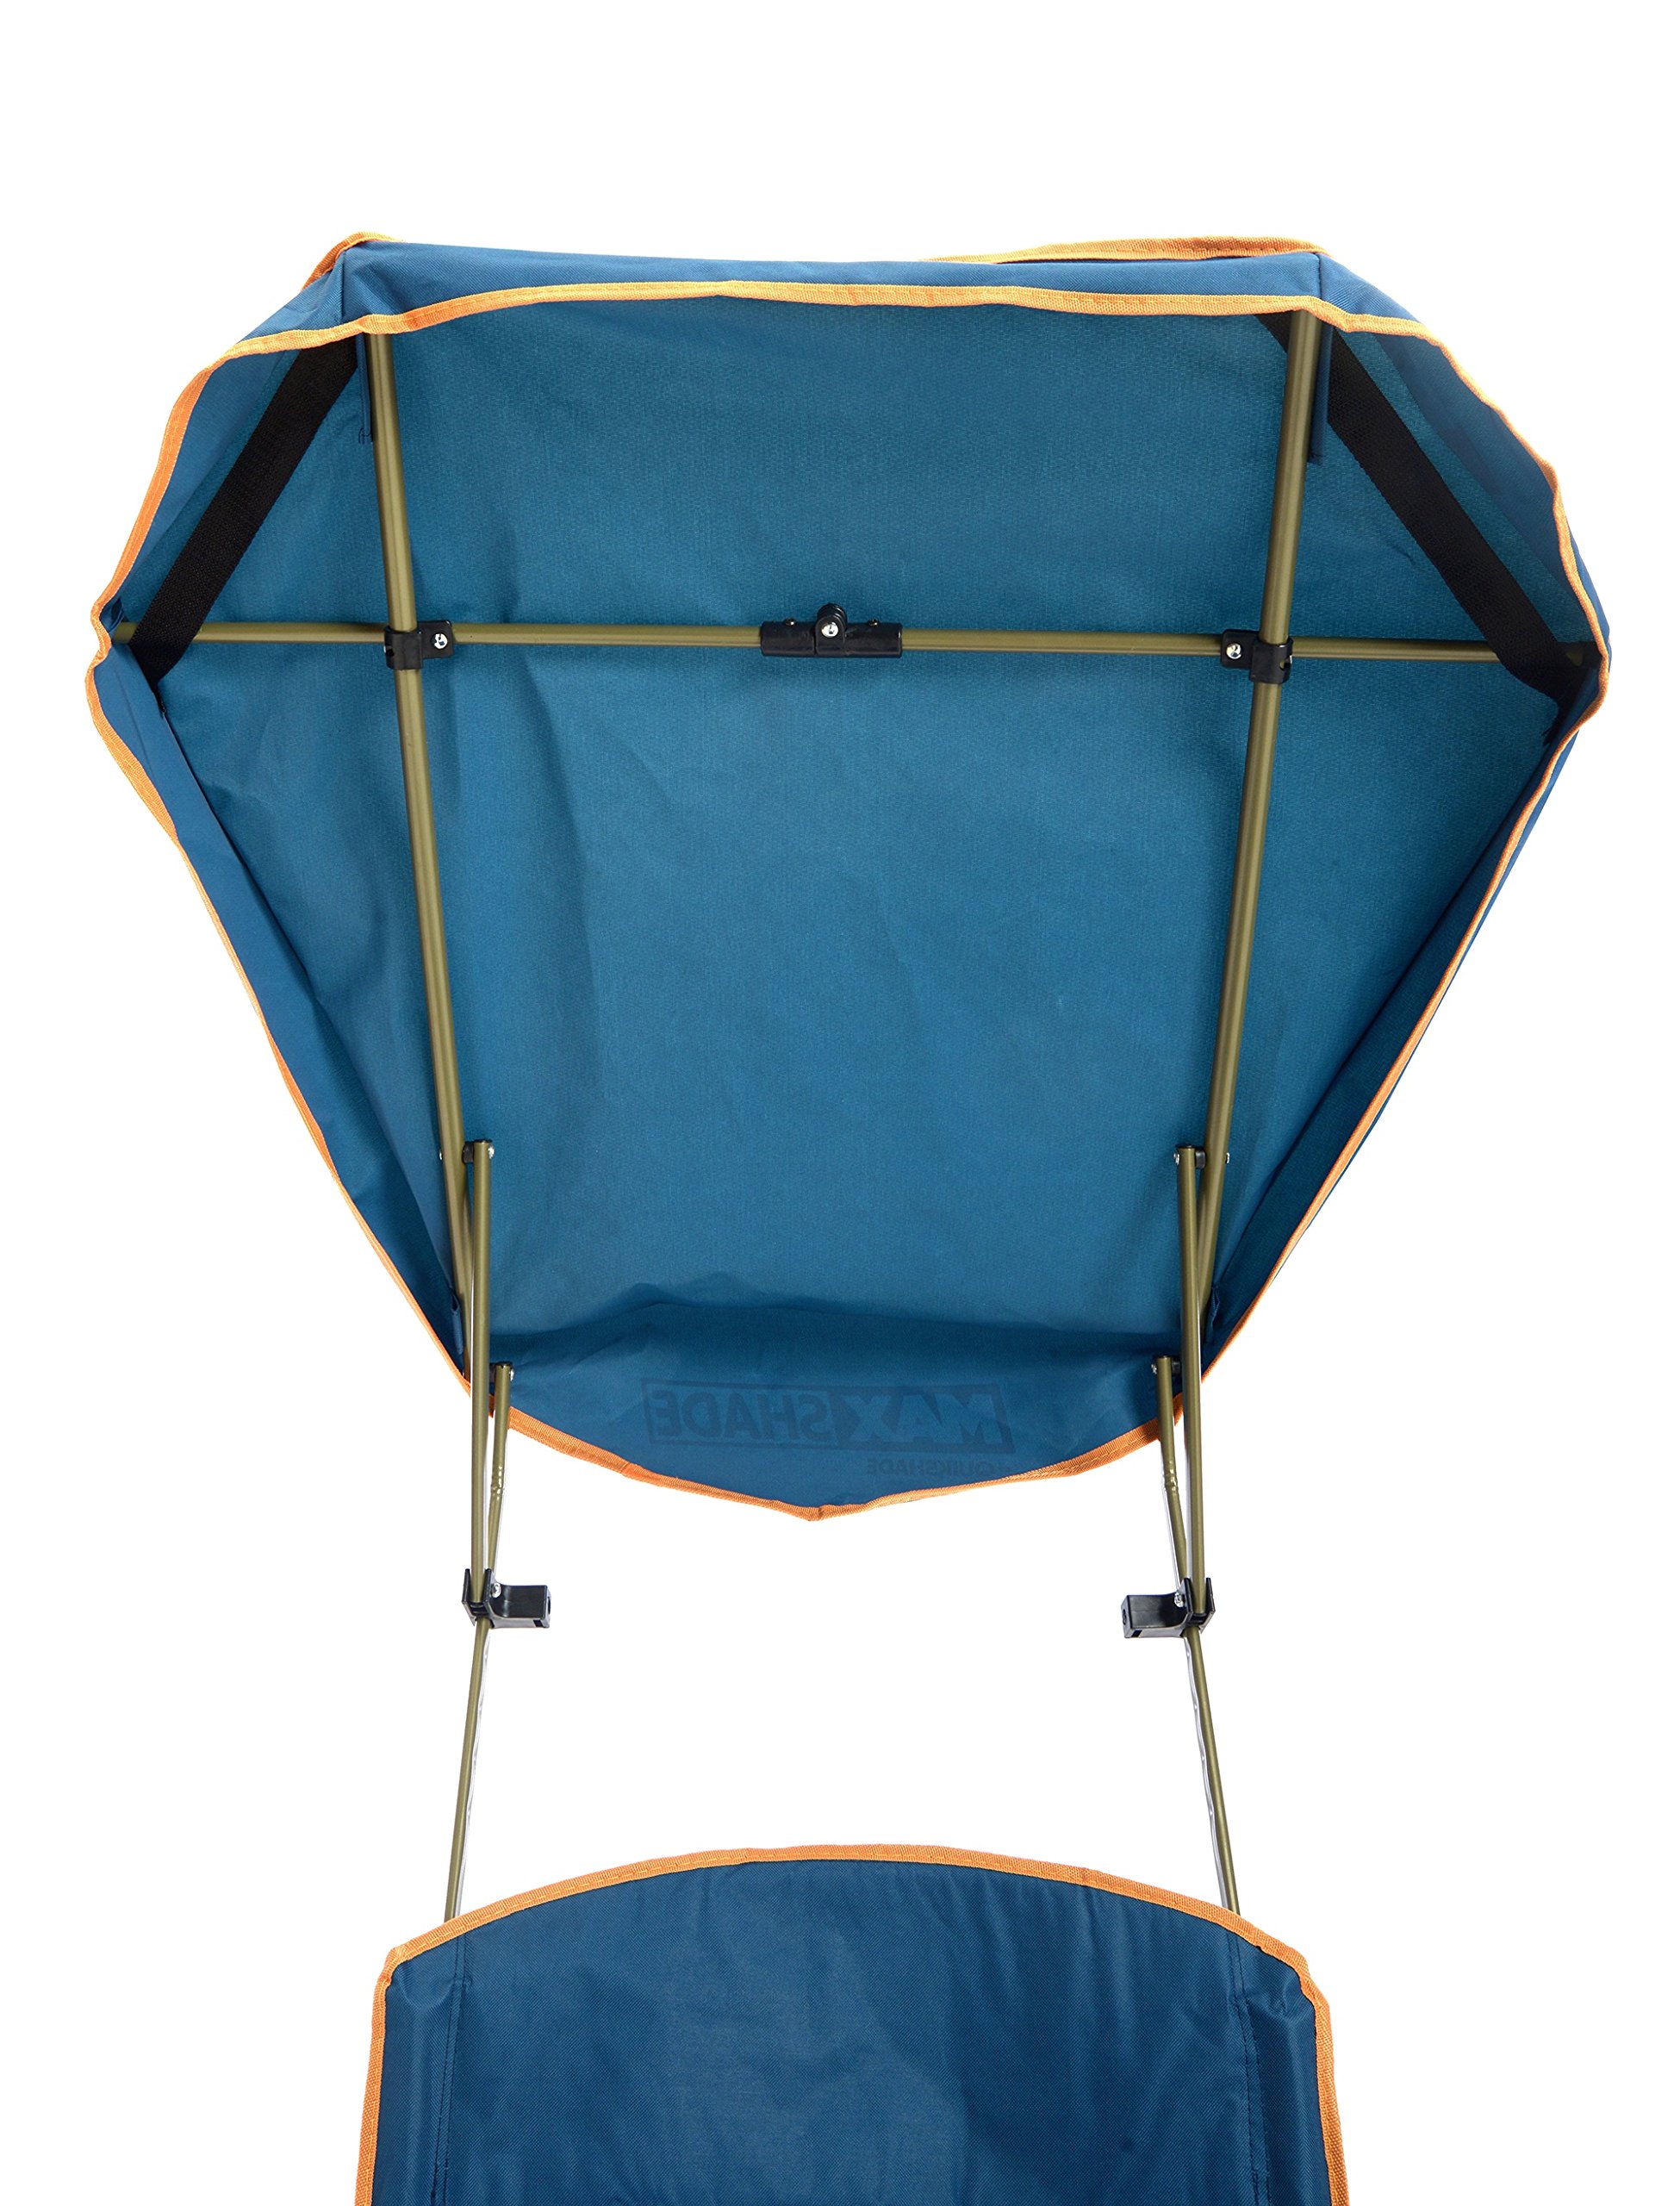 Quik Shade MAX Shade Chair, Navy | eBay